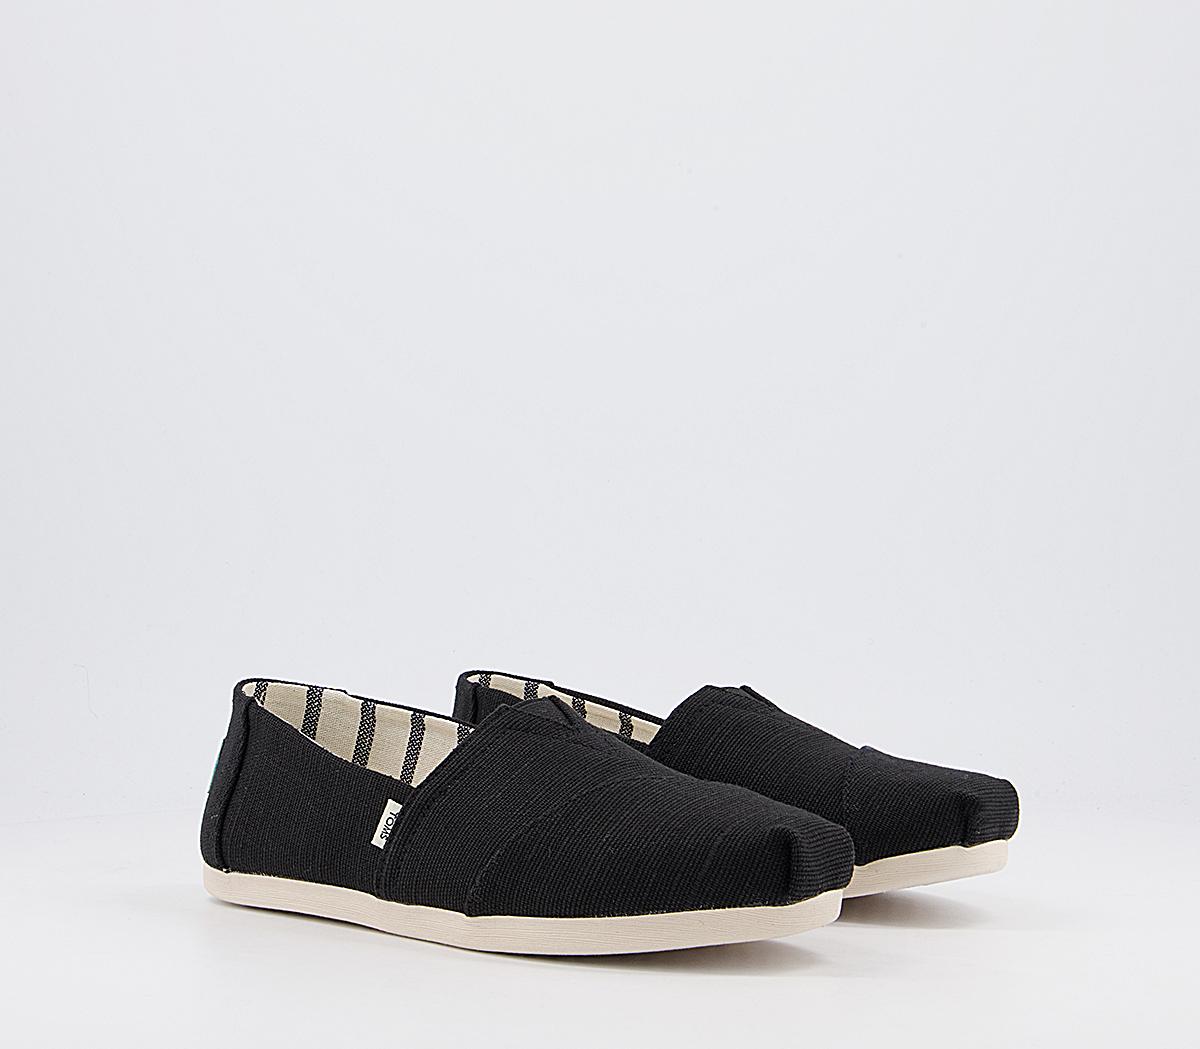 TOMS Alpargata 3.0 Espadrilles Black Heritage - Flat Shoes for Women